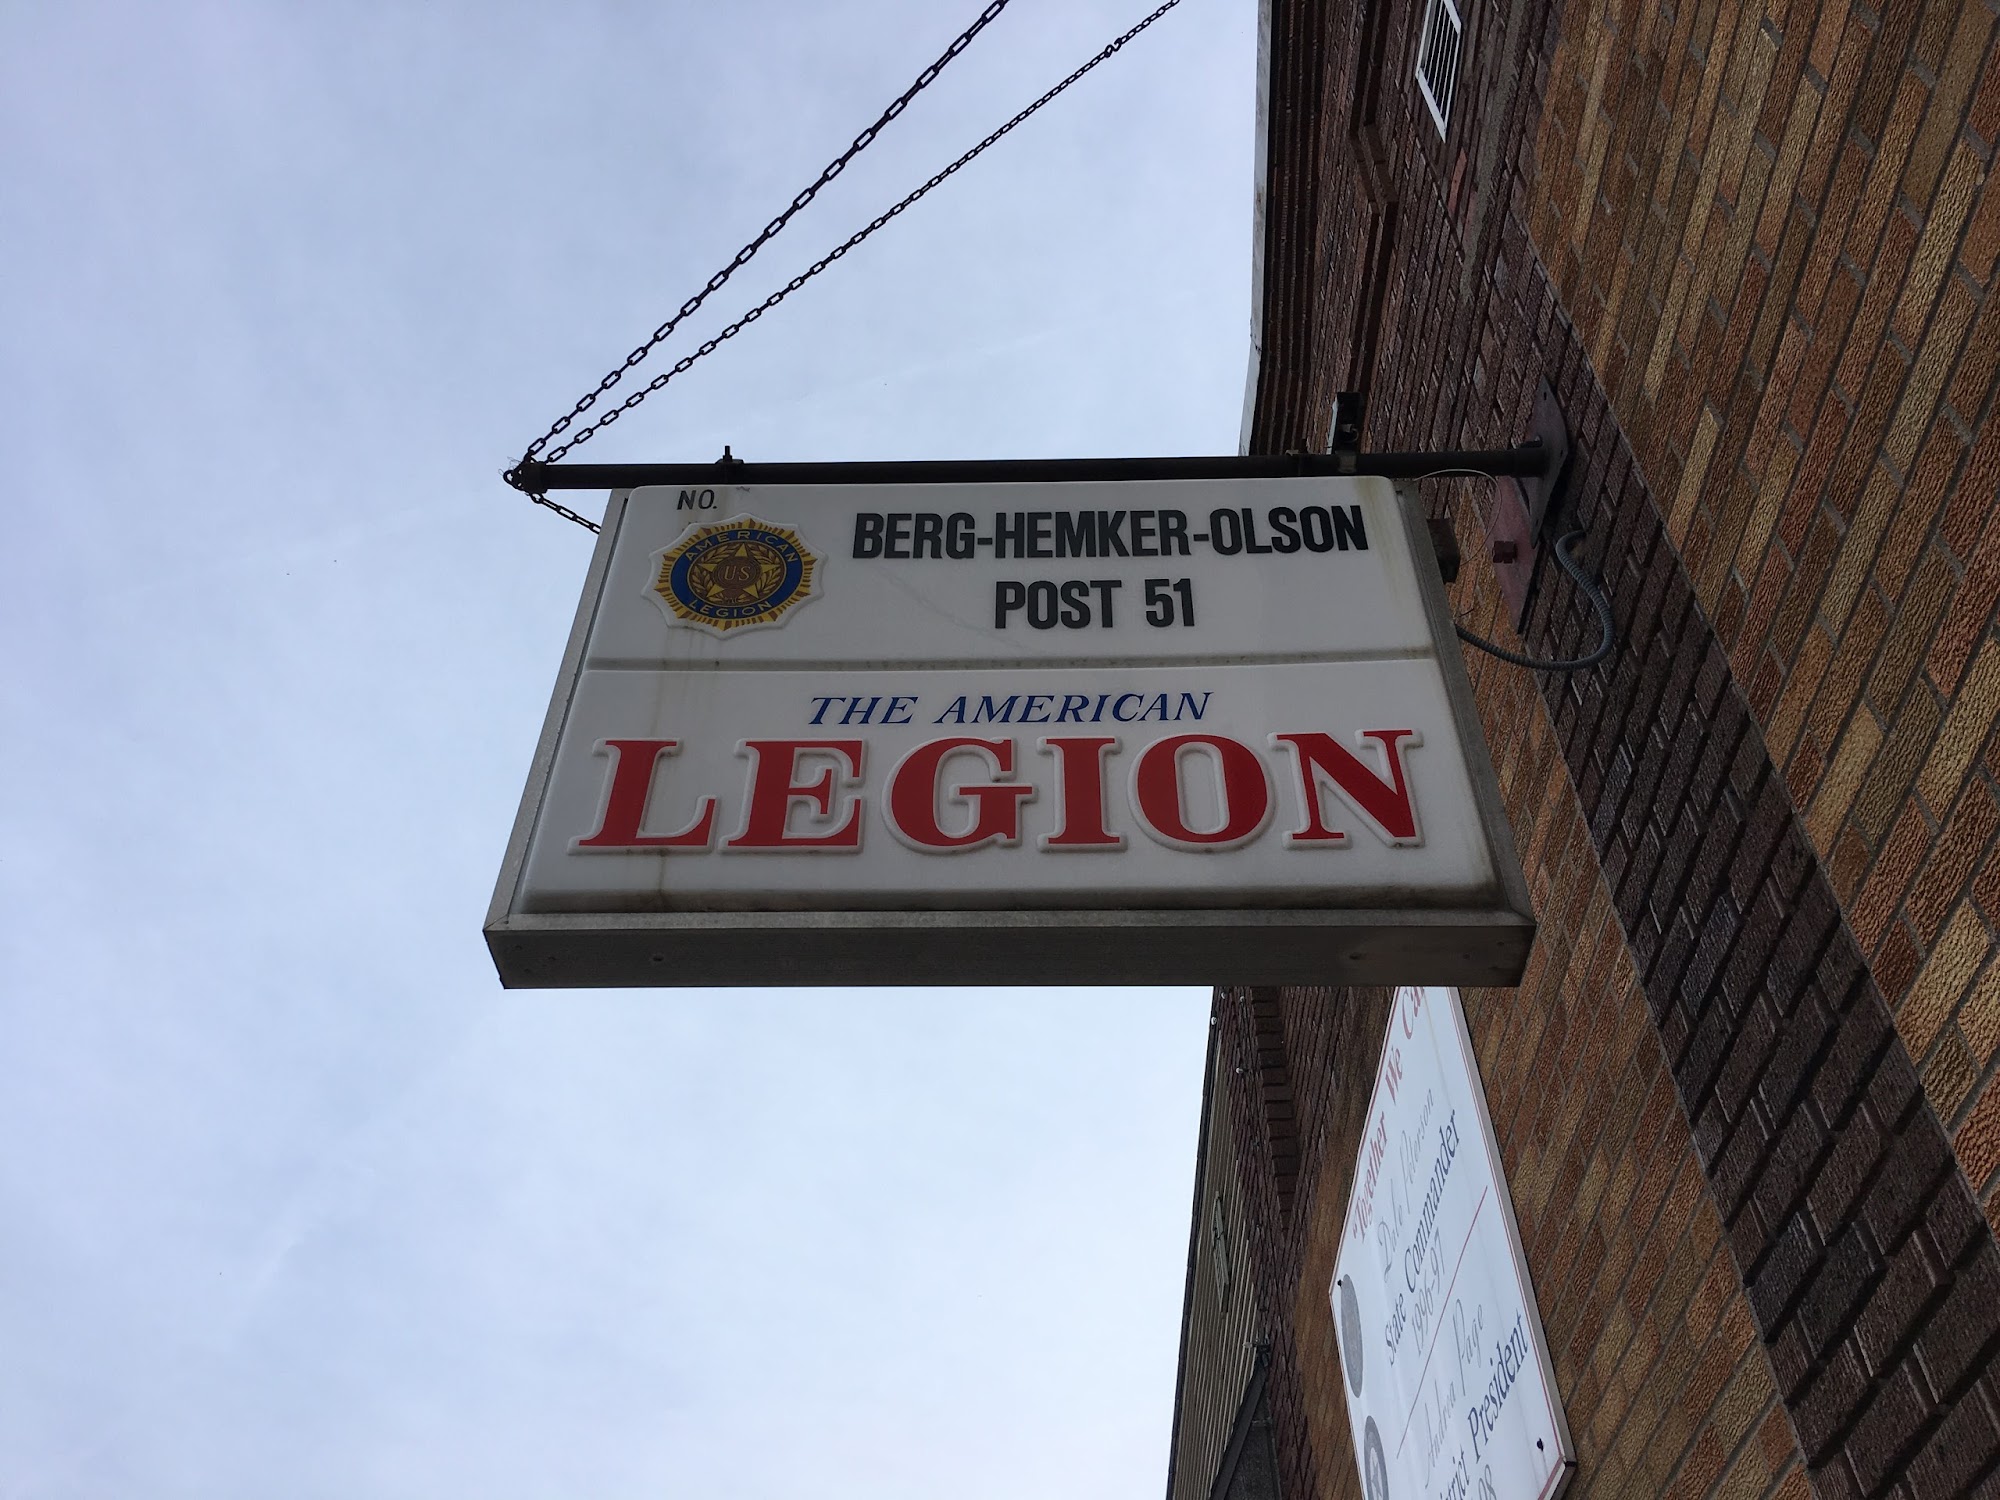 American Legion 148 Leonard St S, West Salem Wisconsin 54669